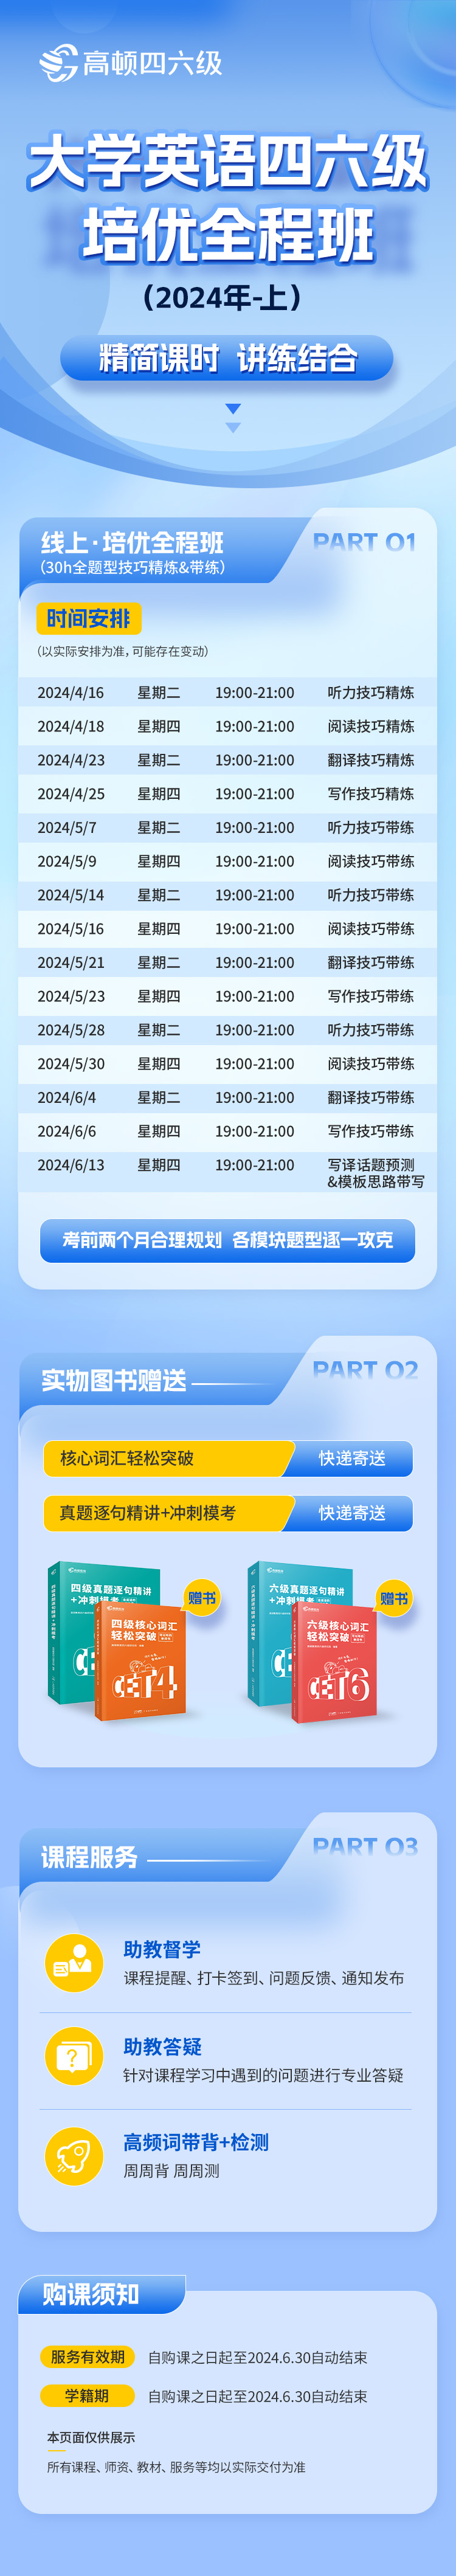 https://simg01.gaodunwangxiao.com/uploadfiles/product-center/202404/28/0ebc9_20240428111727.jpg